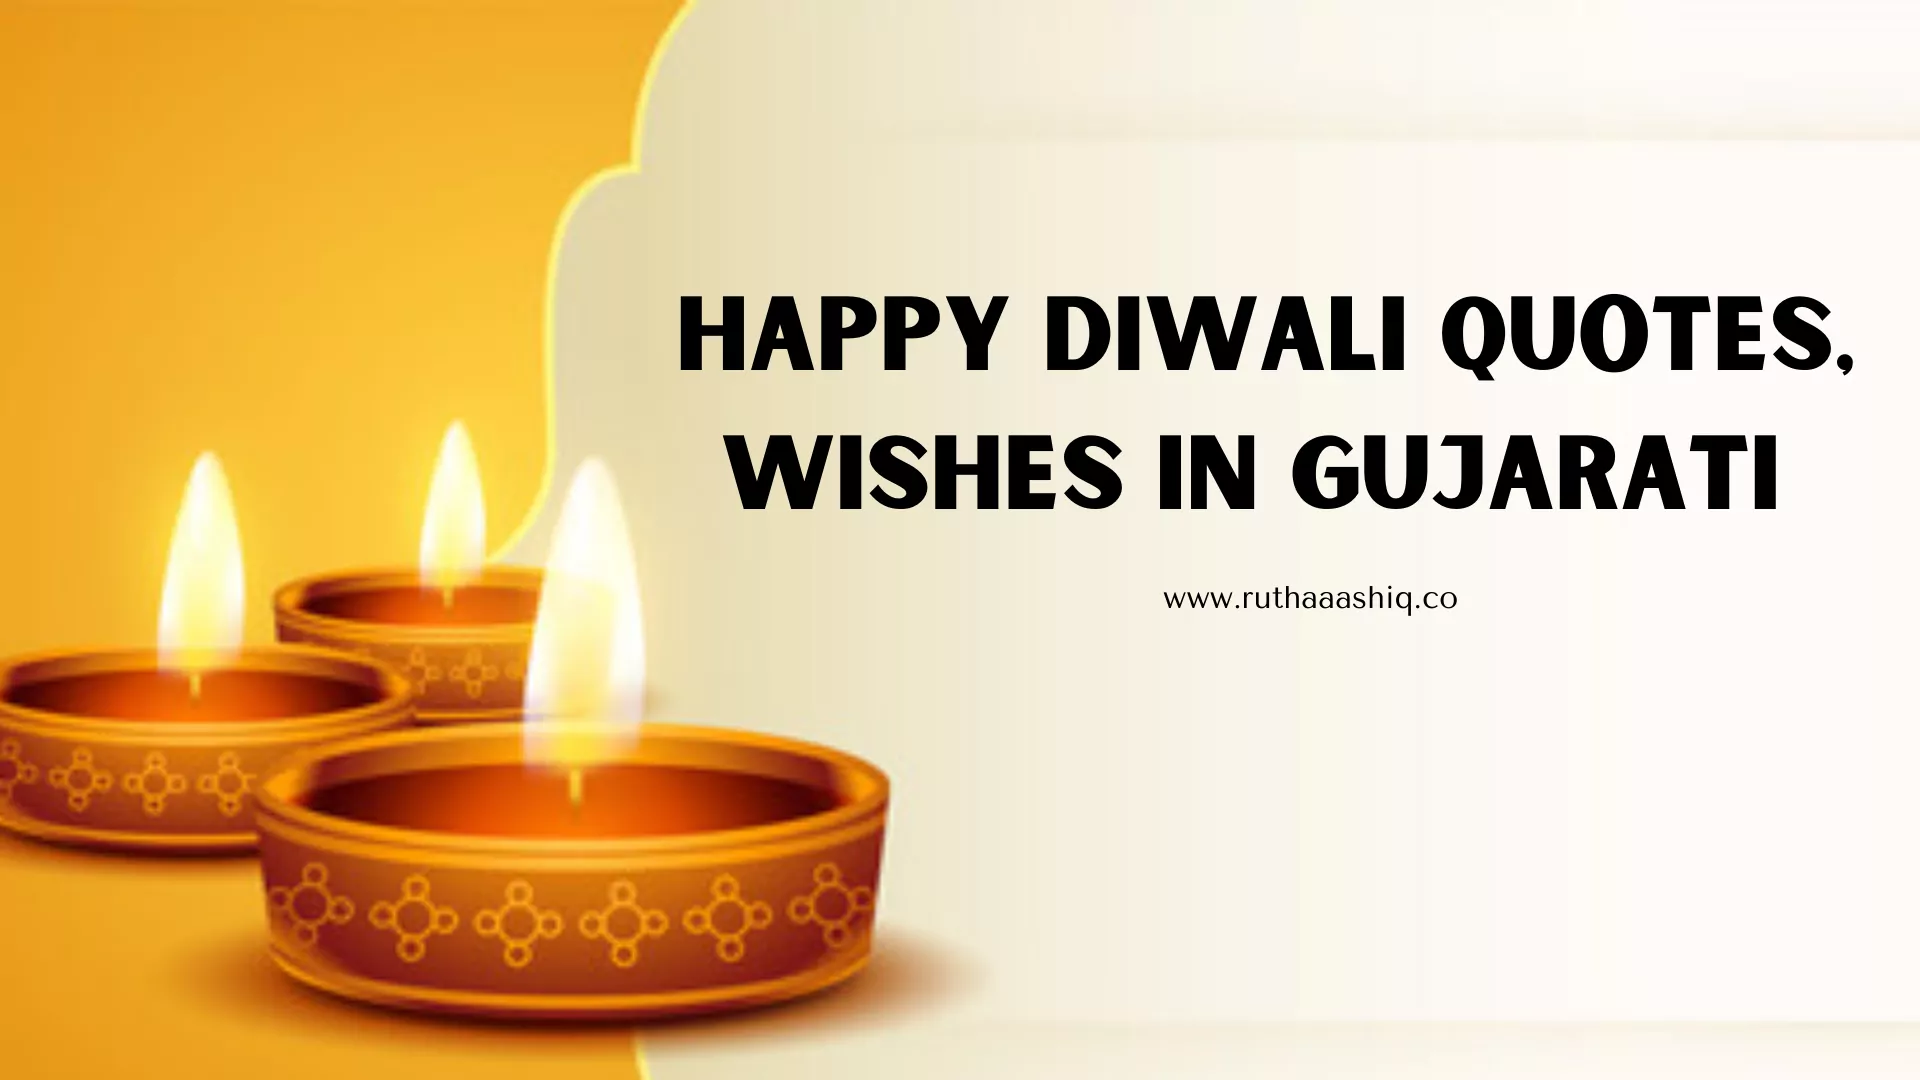 Happy Diwali Quotes, Wishes In Gujarati